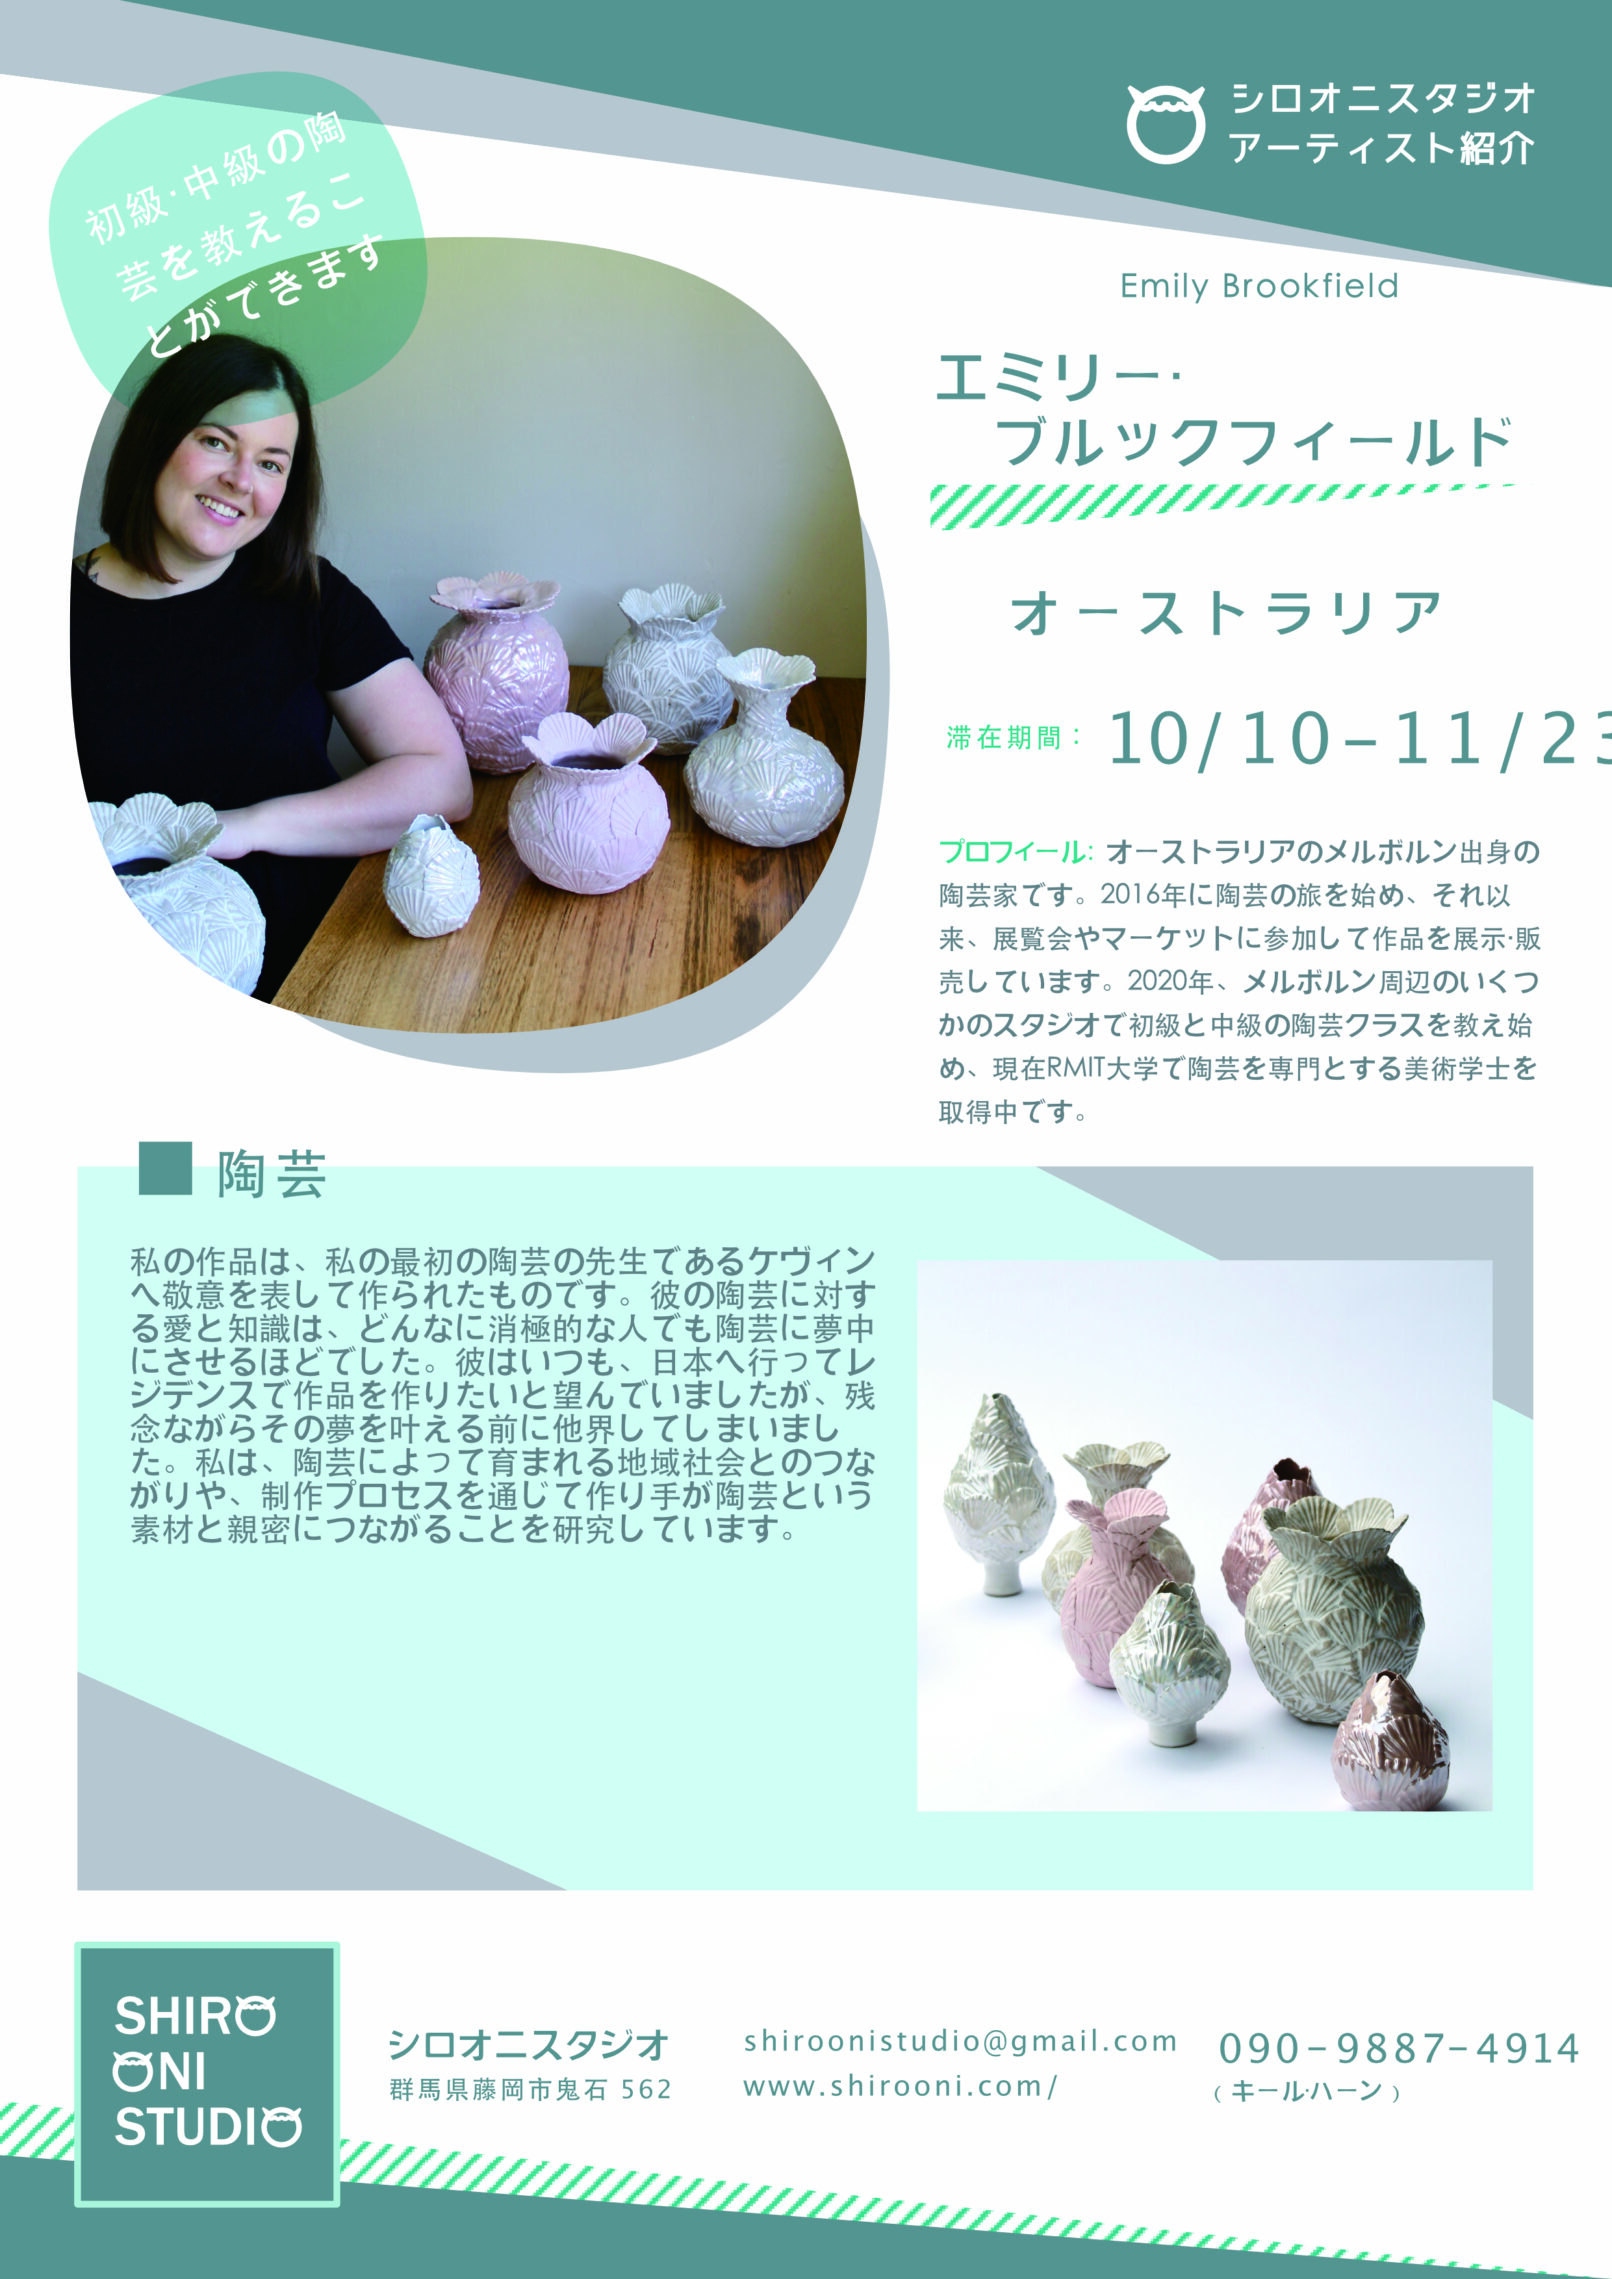 Ceramic Sculptor Emily Brookfield Artist Profile at Shiro Oni Studio